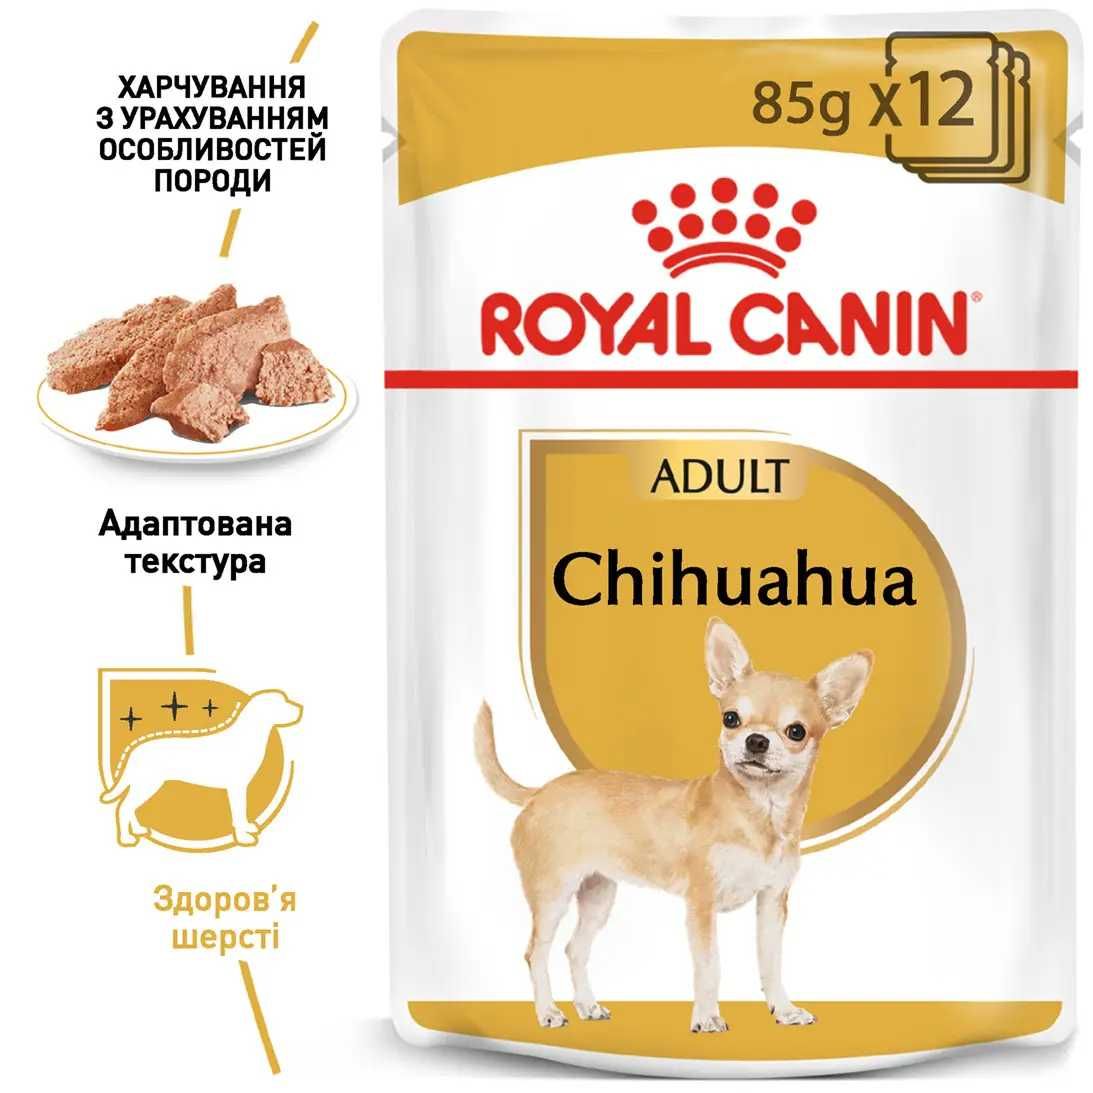 Влажный корм для чихуахуа Royal Canin Chihuahua 12штх85г